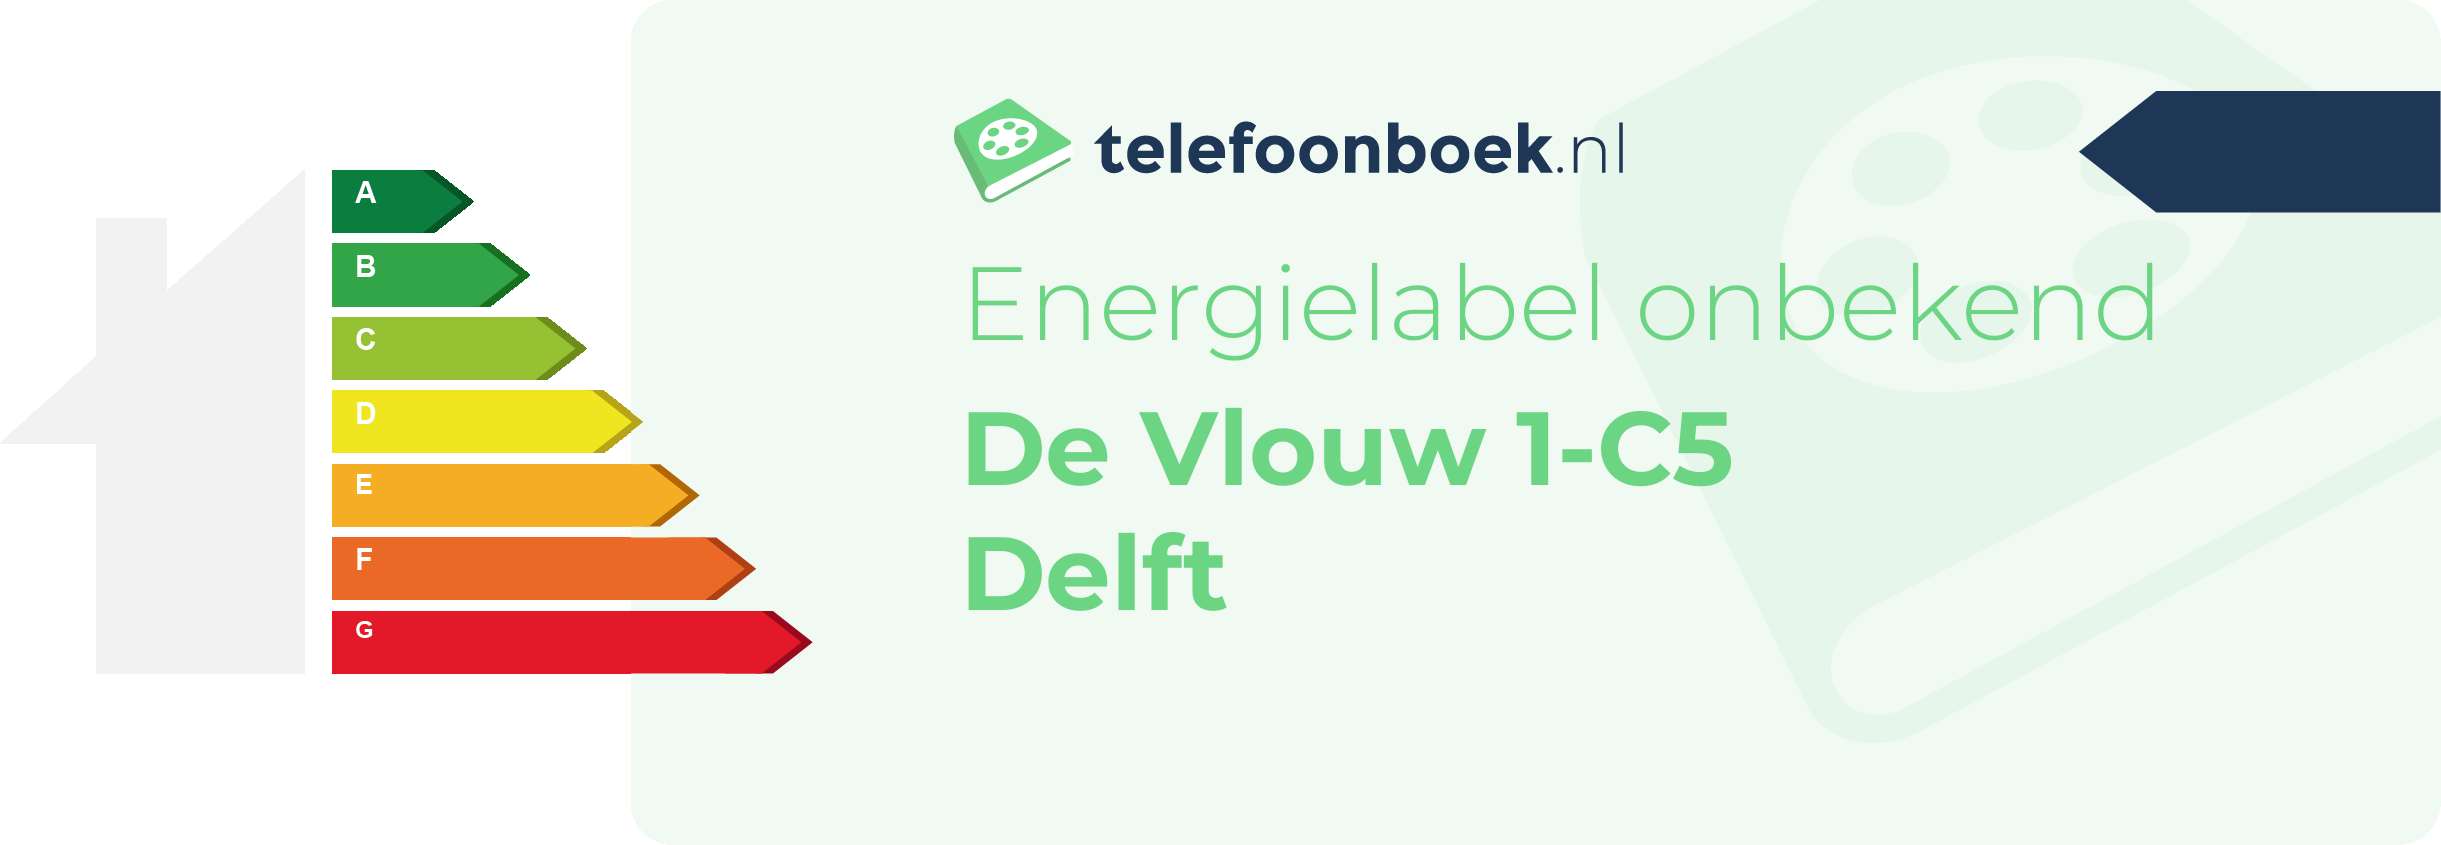 Energielabel De Vlouw 1-C5 Delft